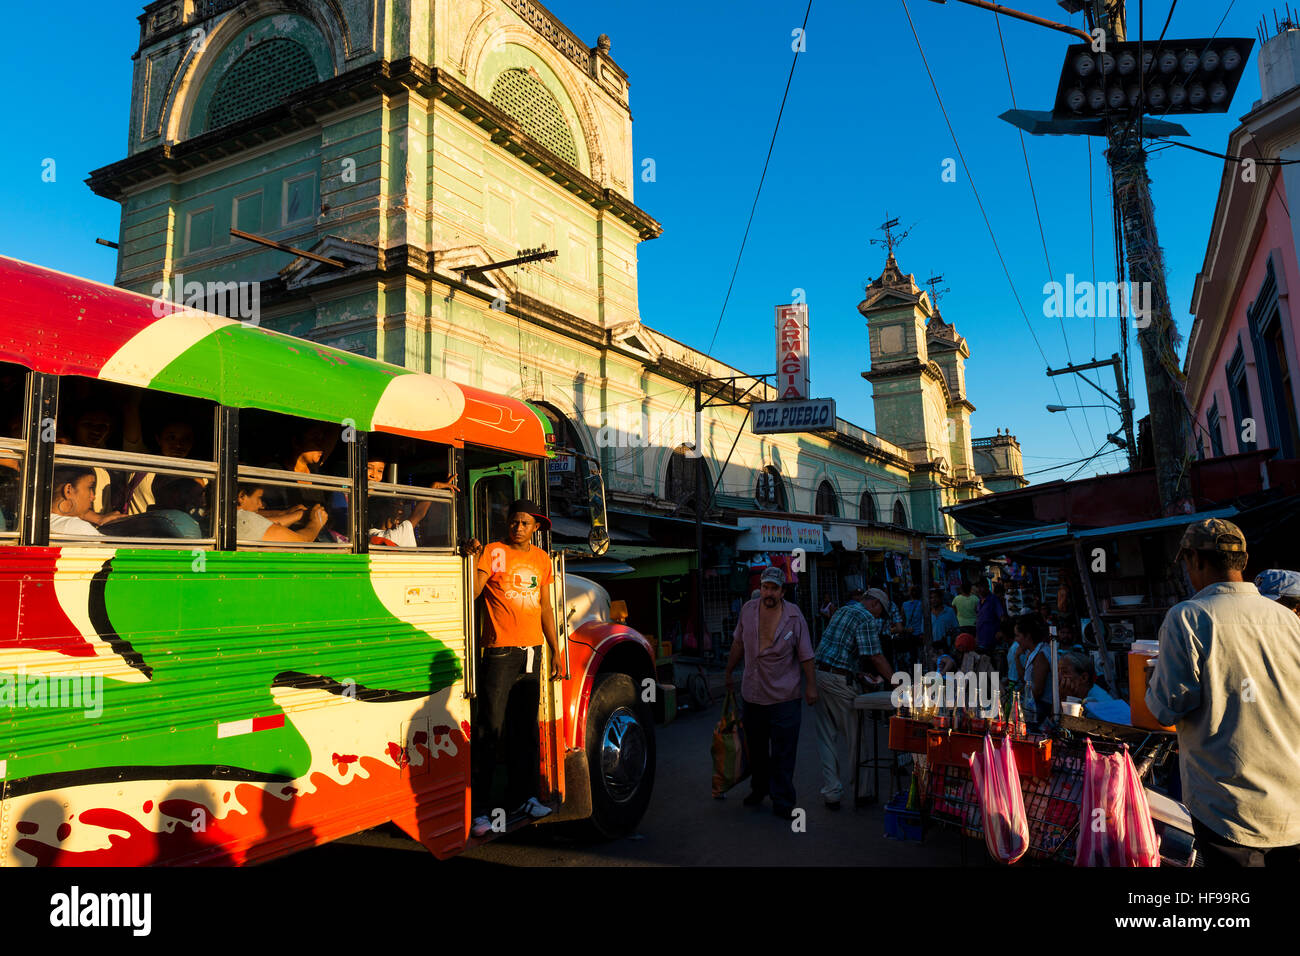 Granada, Nicaragua - April 2, 2014: People in a market in the city of Granada in Nicaragua, Central America Stock Photo